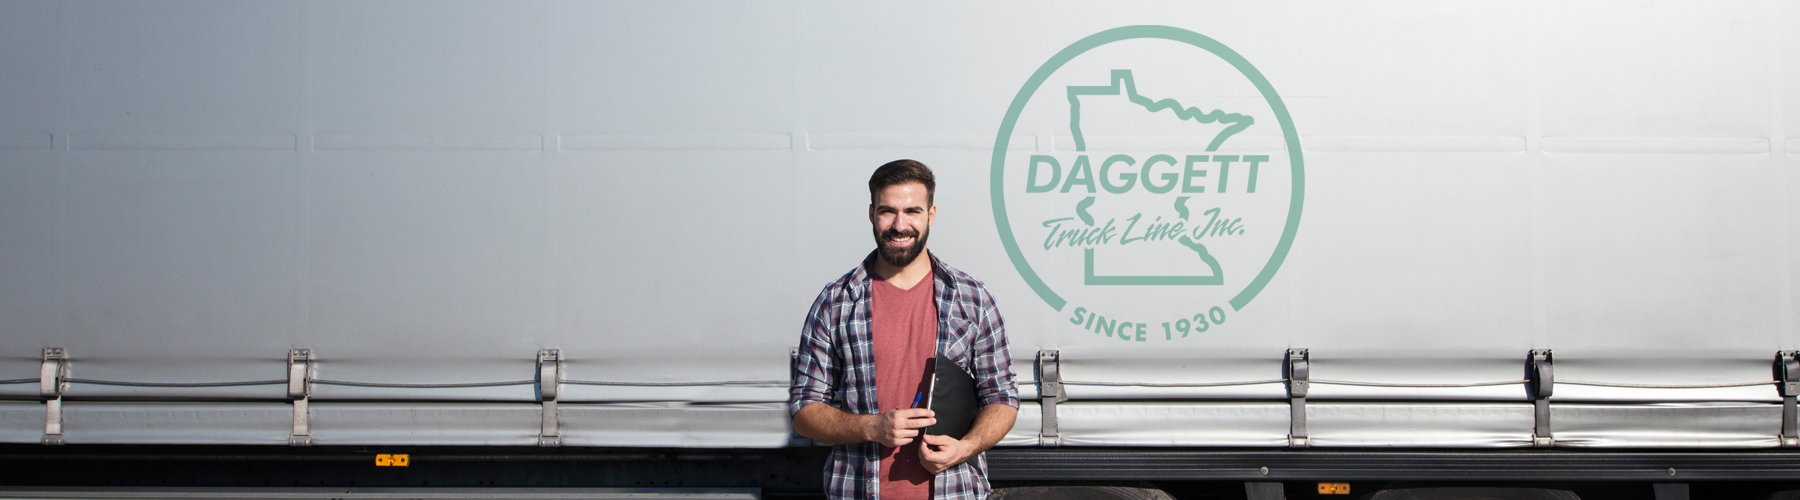 Daggett Truck Line Inc - Banner